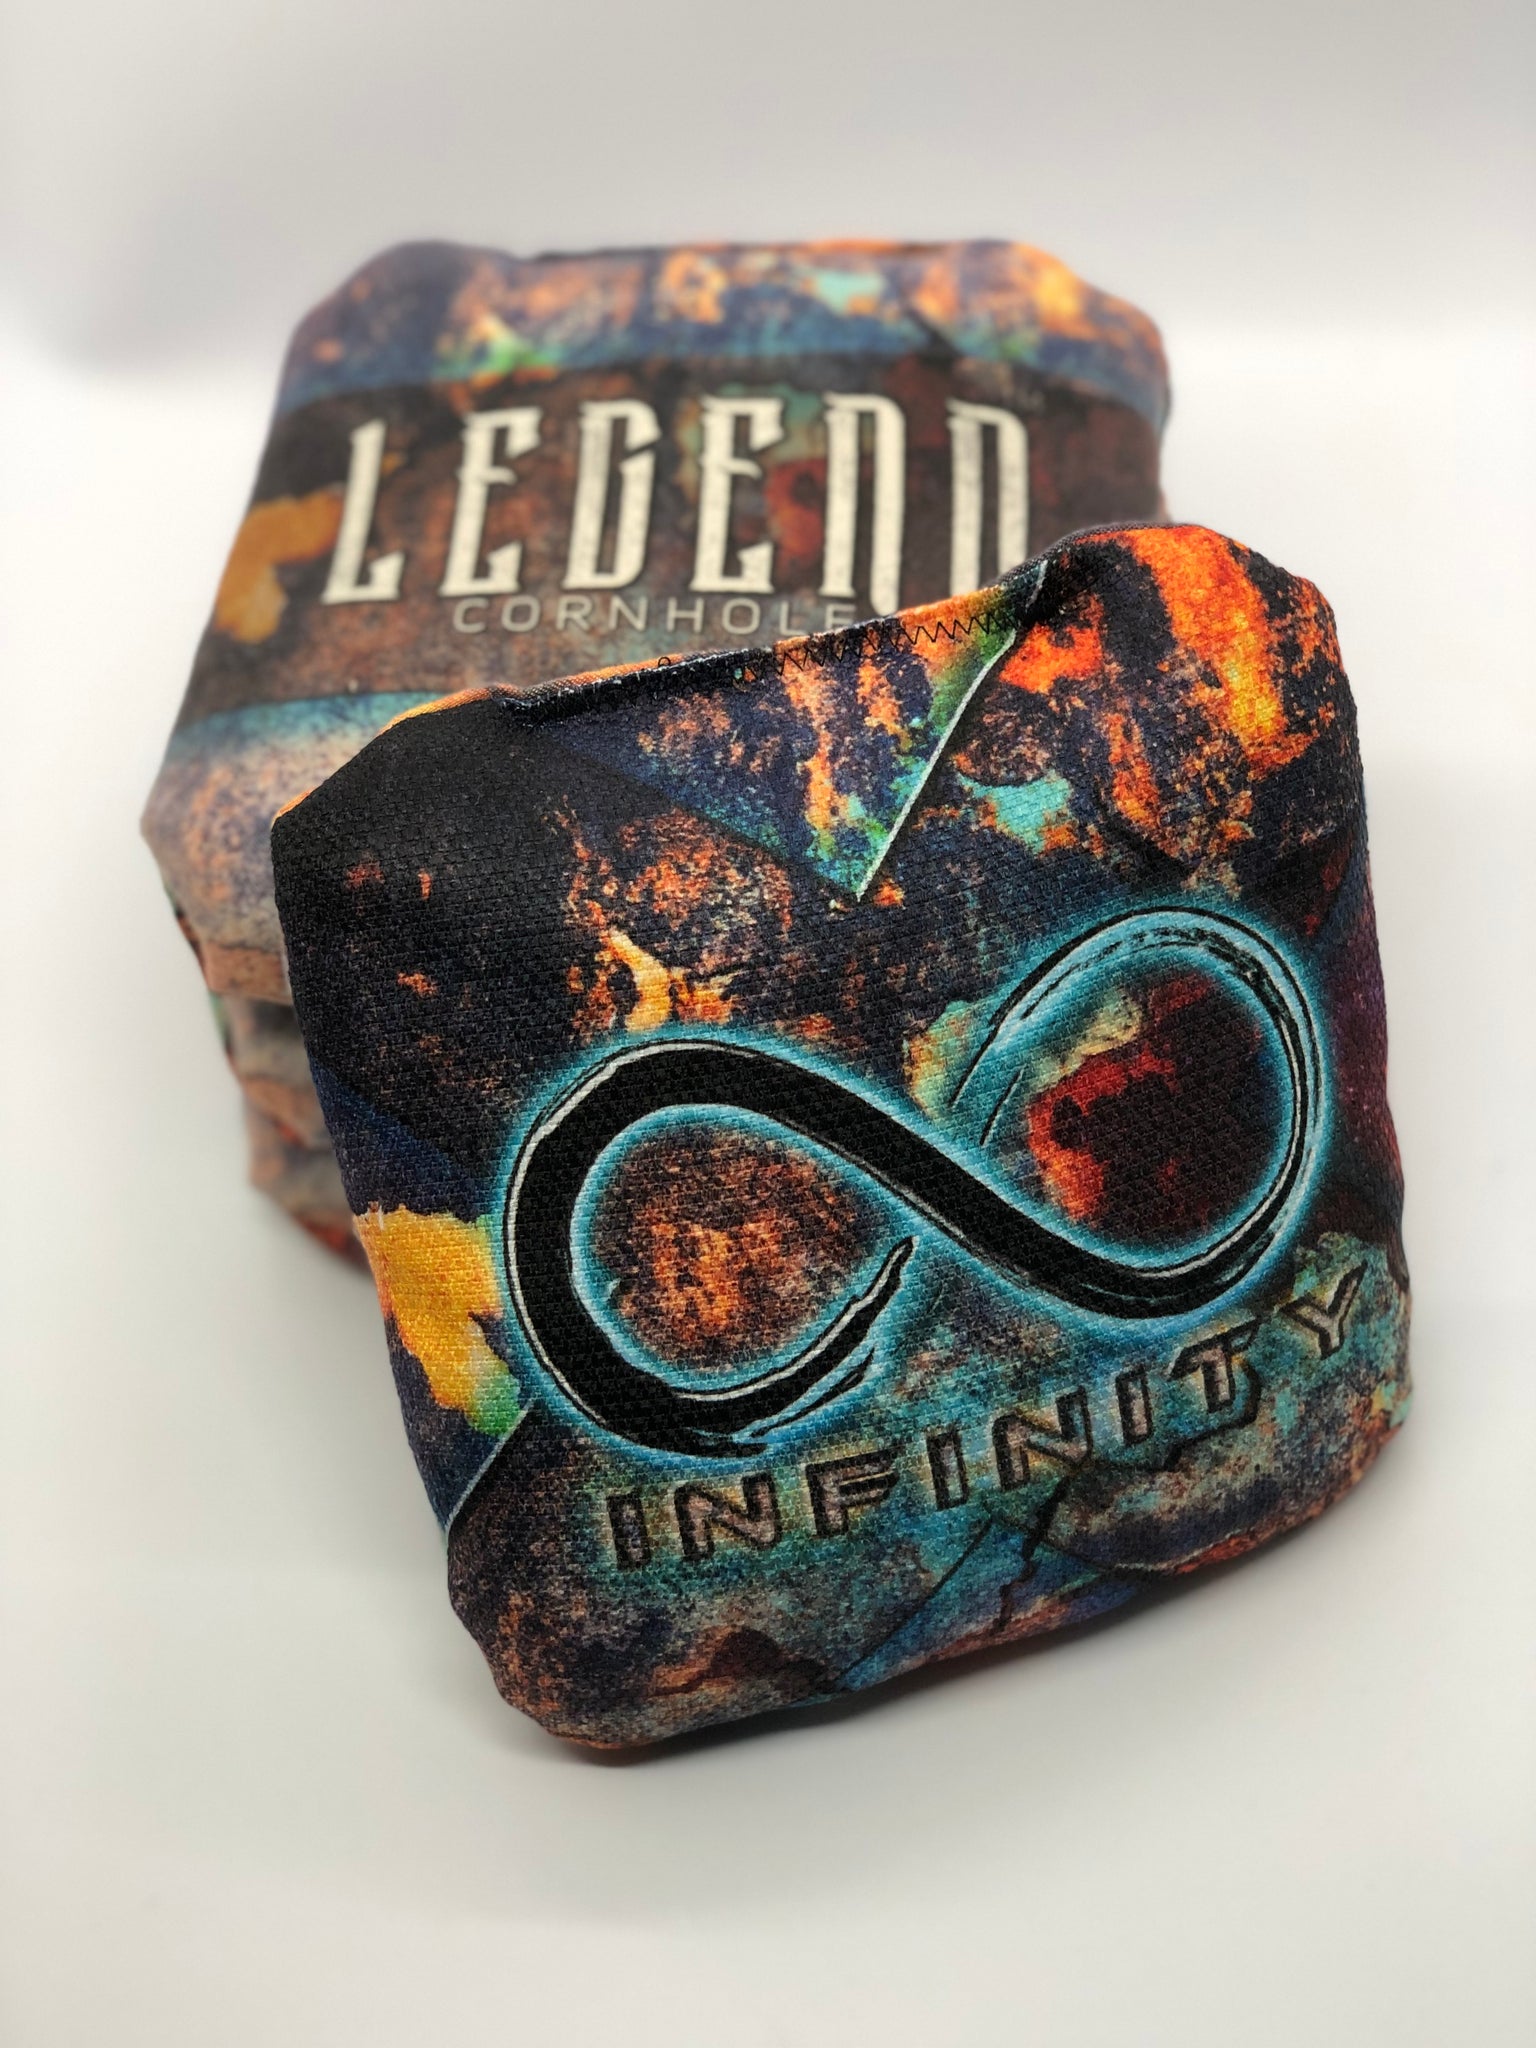 Legend "INFINITY" Premium Cornhole Bag (set of 4)